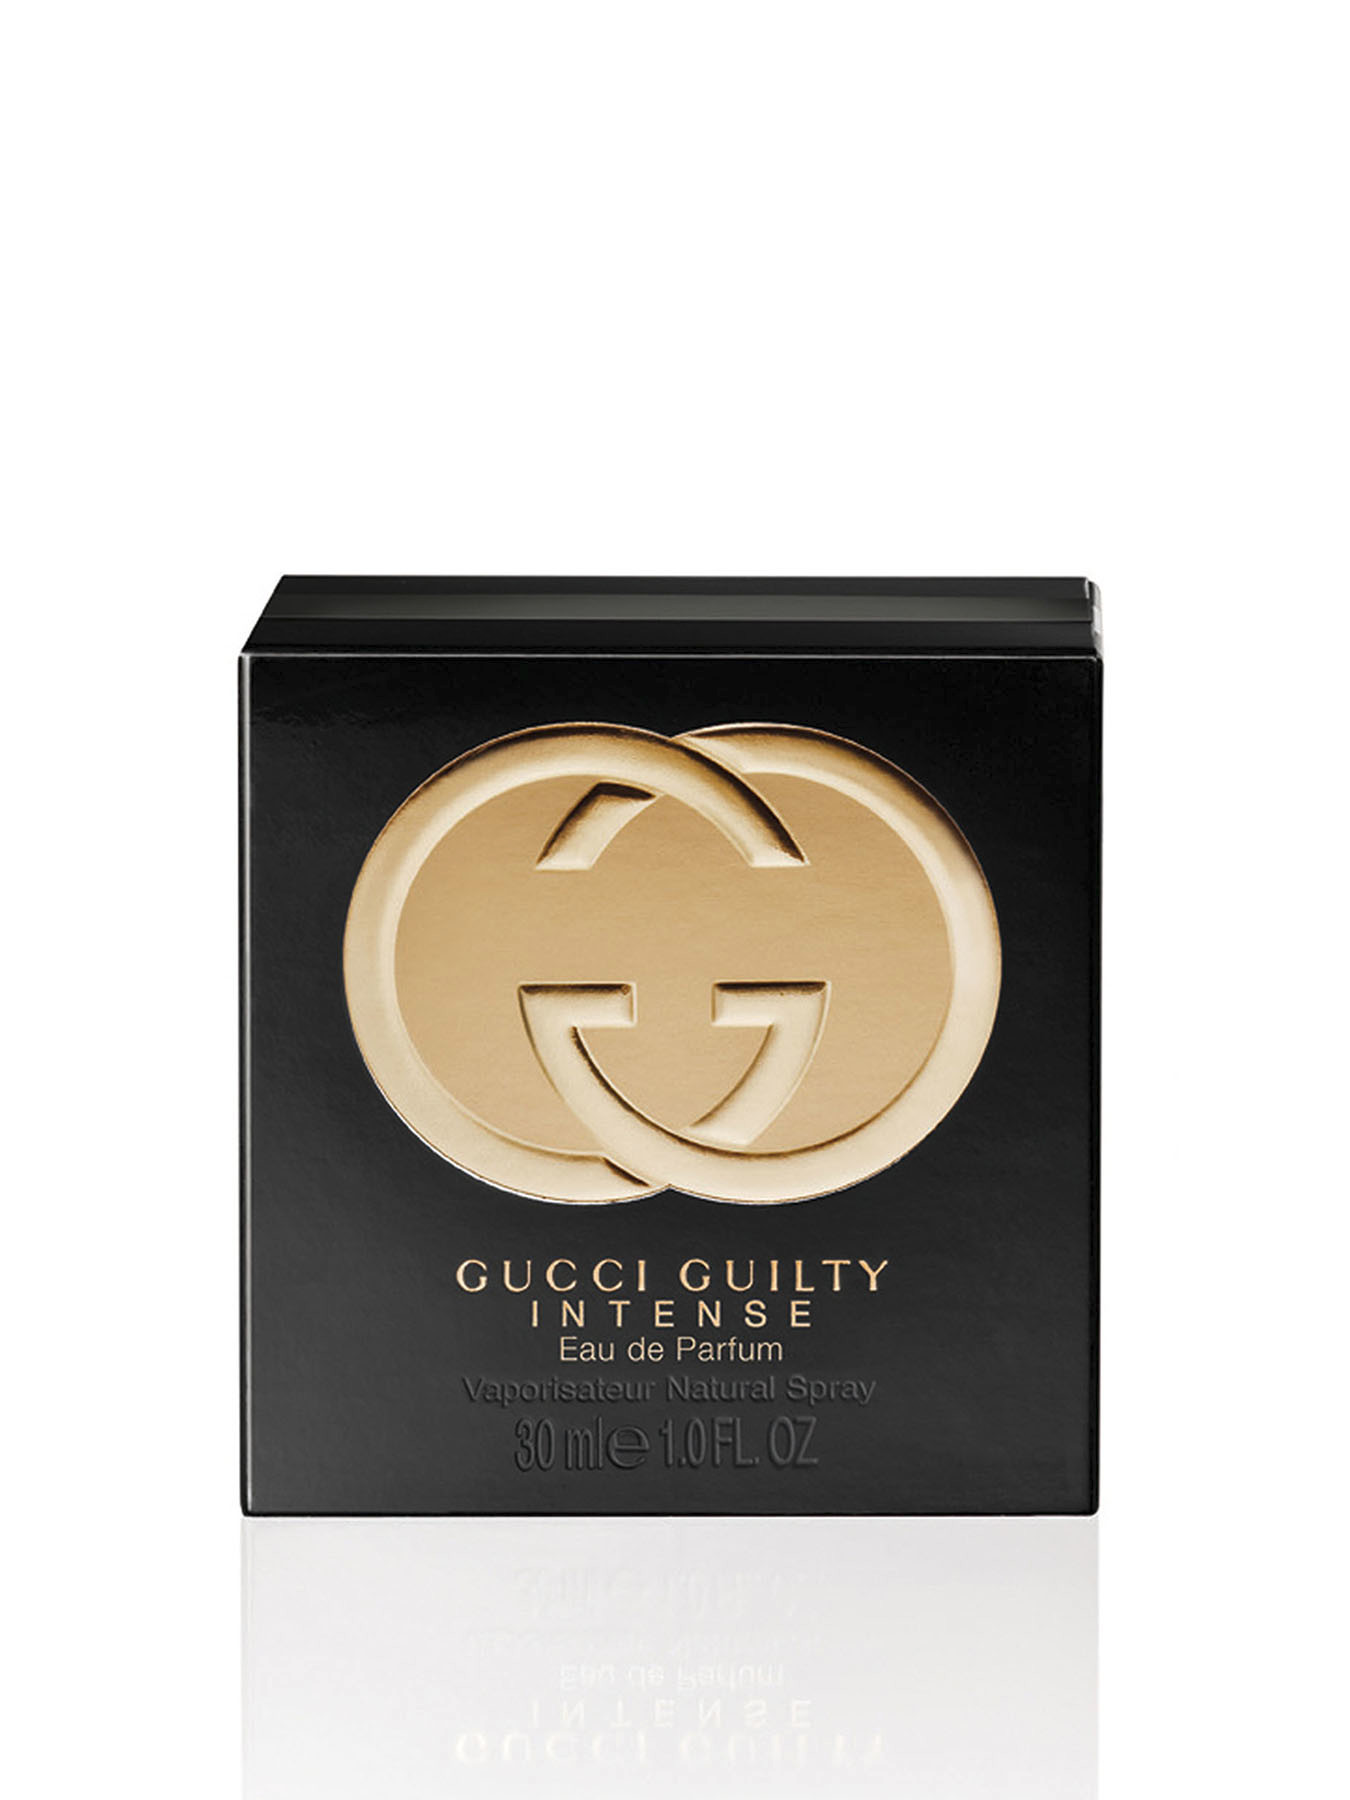 GUCCI BEAUTY Gucci Guilty Intense Eau de Parfum For Her 30ml | Fenwick